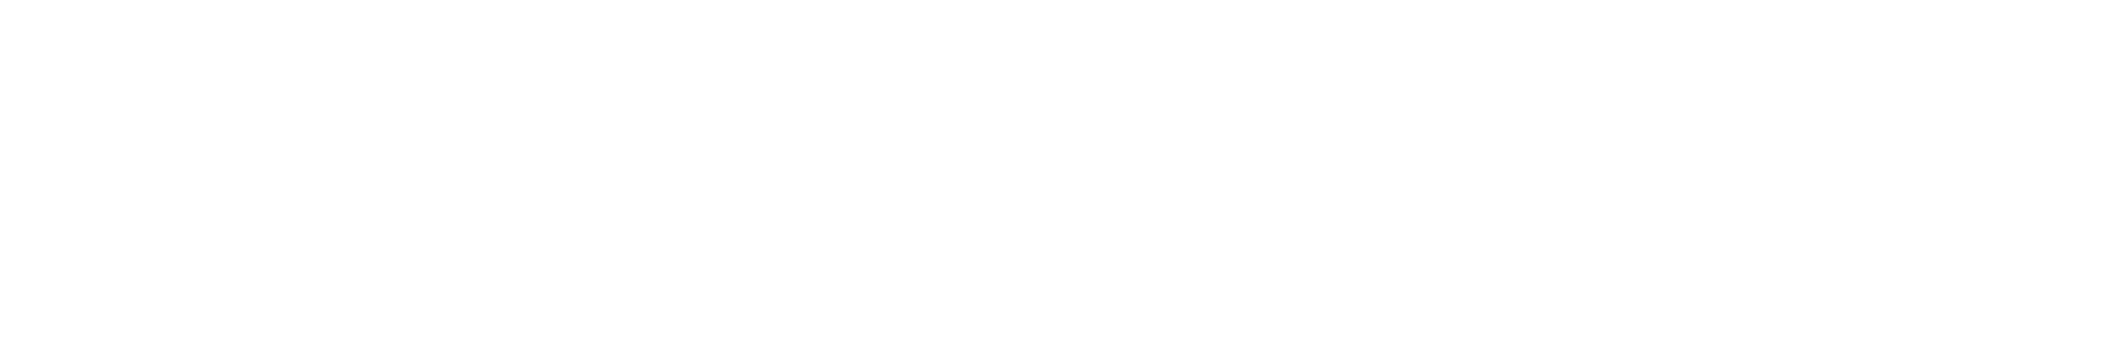 Pixel Perfect Partnership: Google and Helium Mobile Launch Phone, Service & Hotspot Bundles